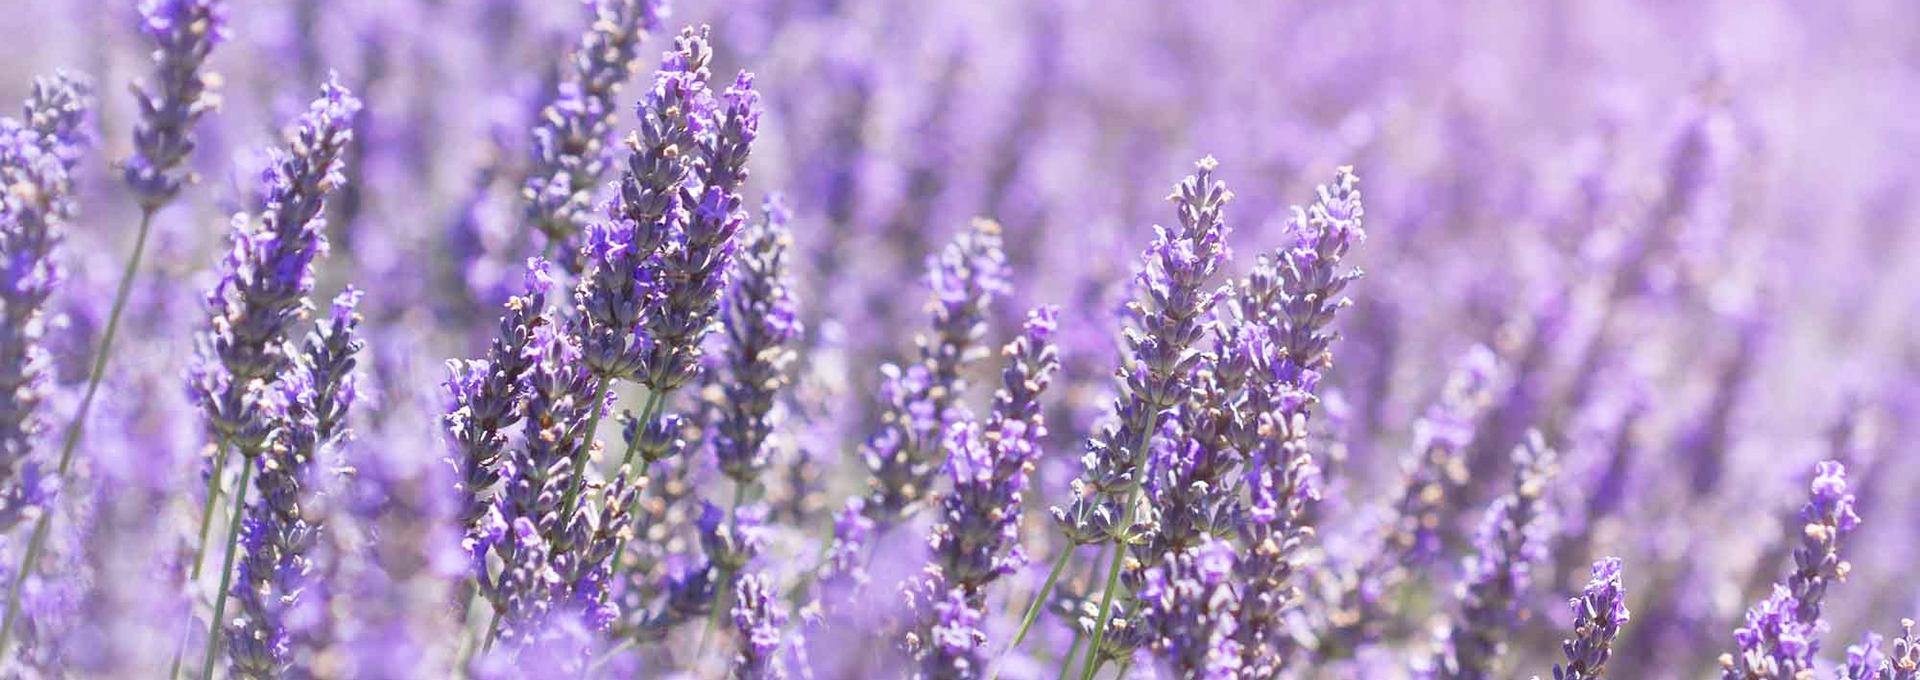 Blooming lavendera